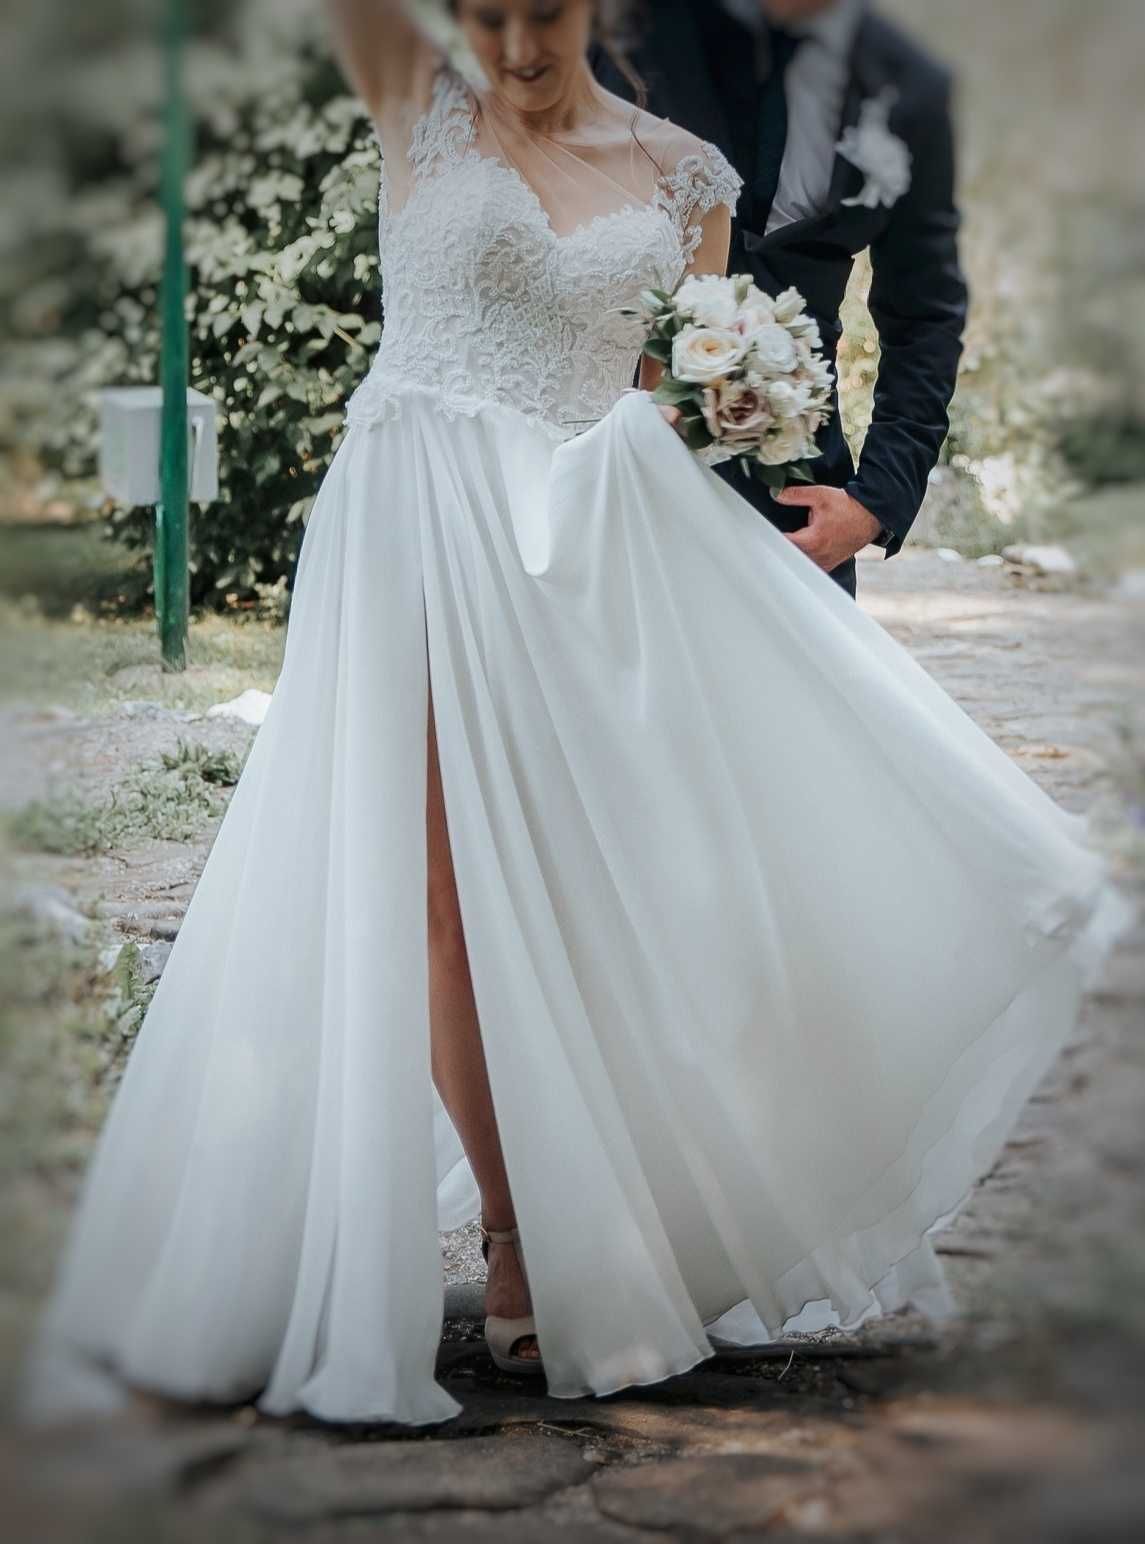 Rochii mireasa/ Moda și frumusețe/ Haine pentru nunta